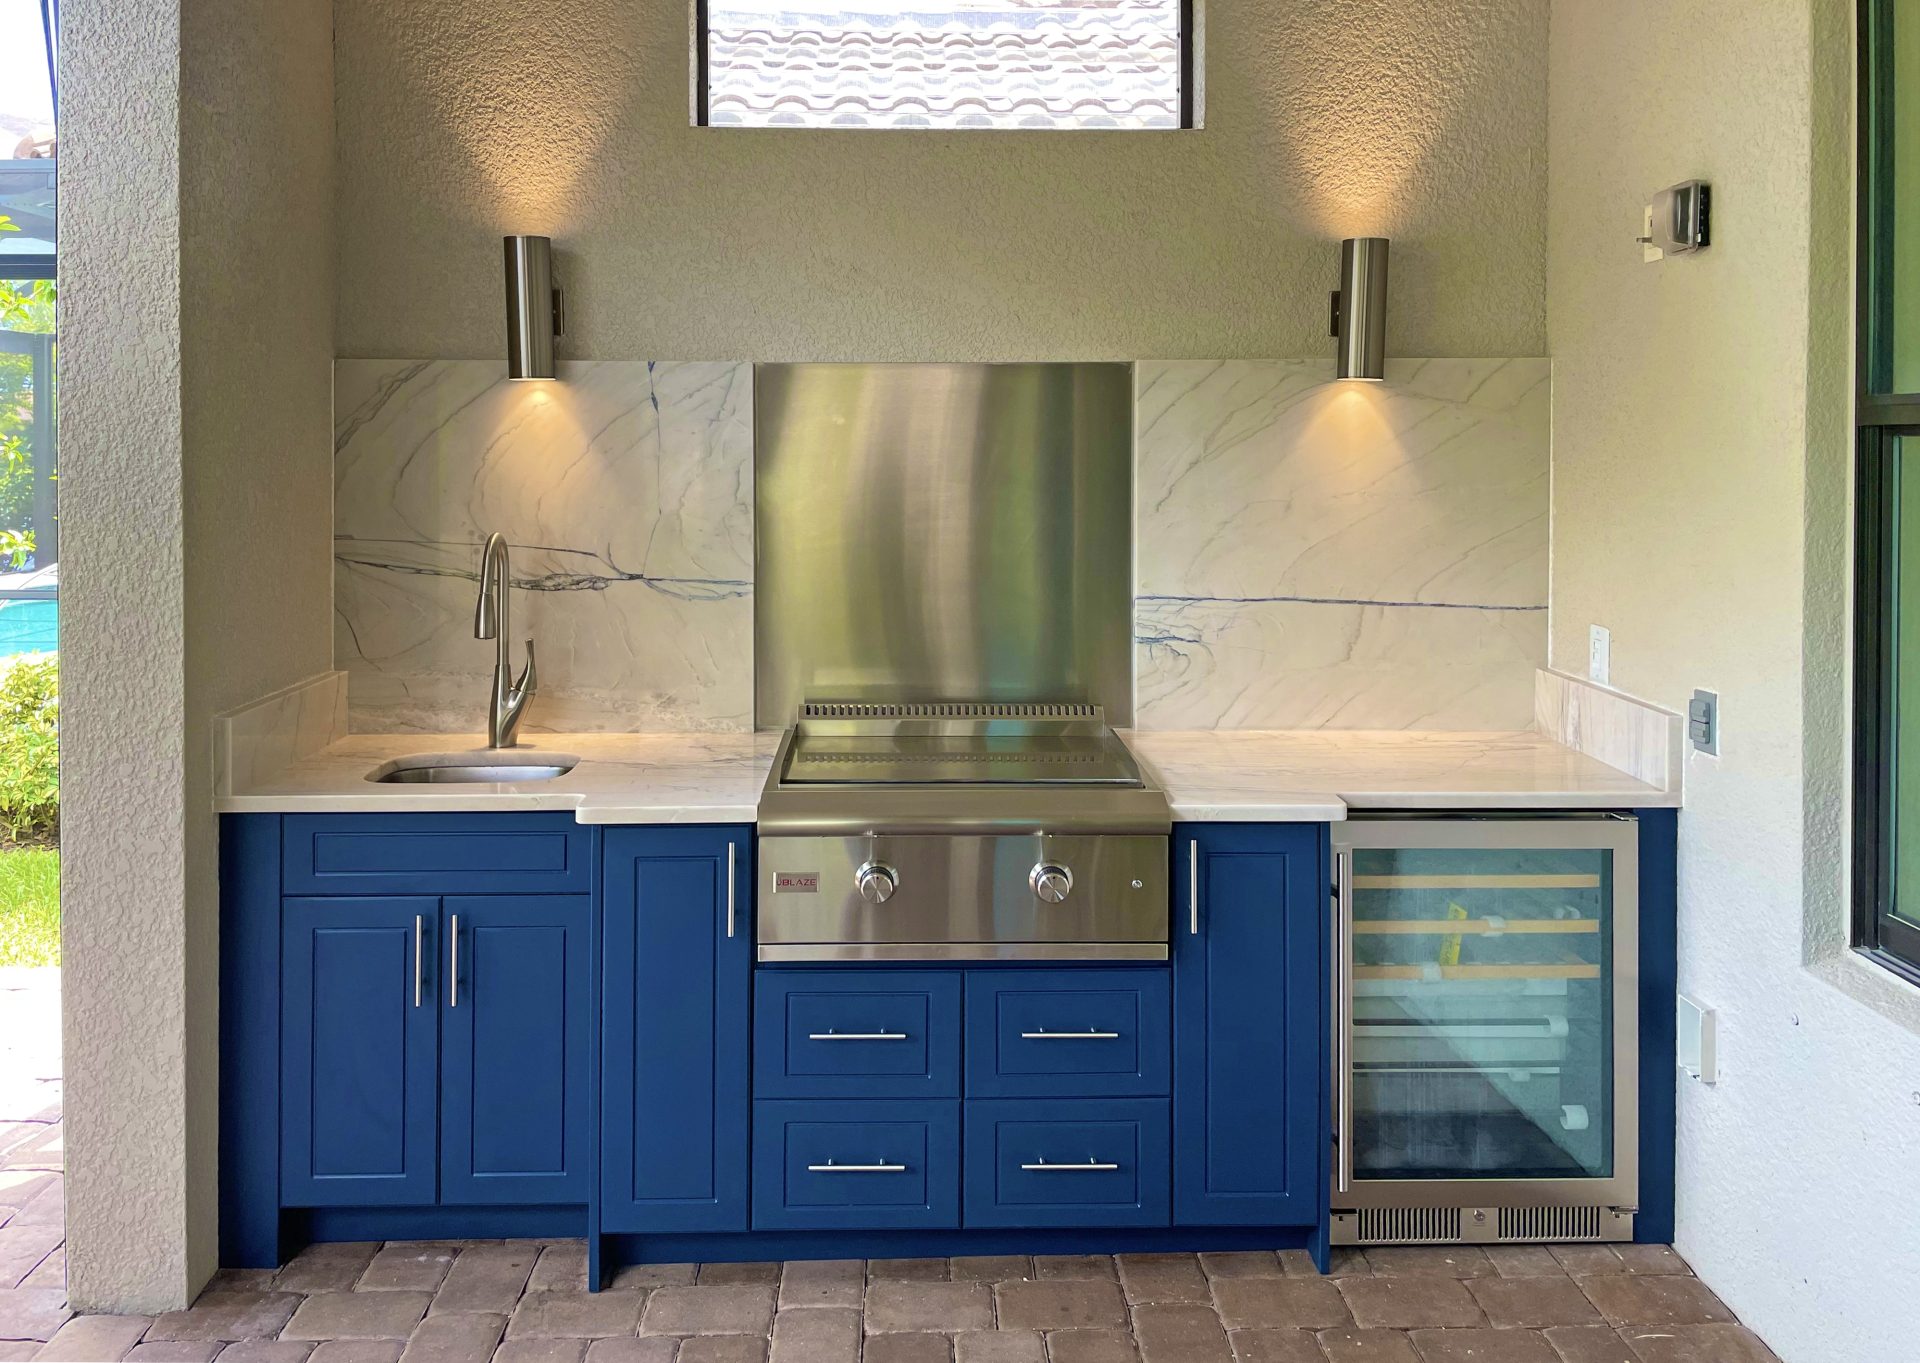 OUTDOOR KITCHEN 32. Custom outdoor kitchen in Sarasota, FL. Kitchen features indigo blue, sport style cabinets. Appliances include Blaze griddle, stainless backsplash, Azure glass front refrigerator and stainless bar pulls.